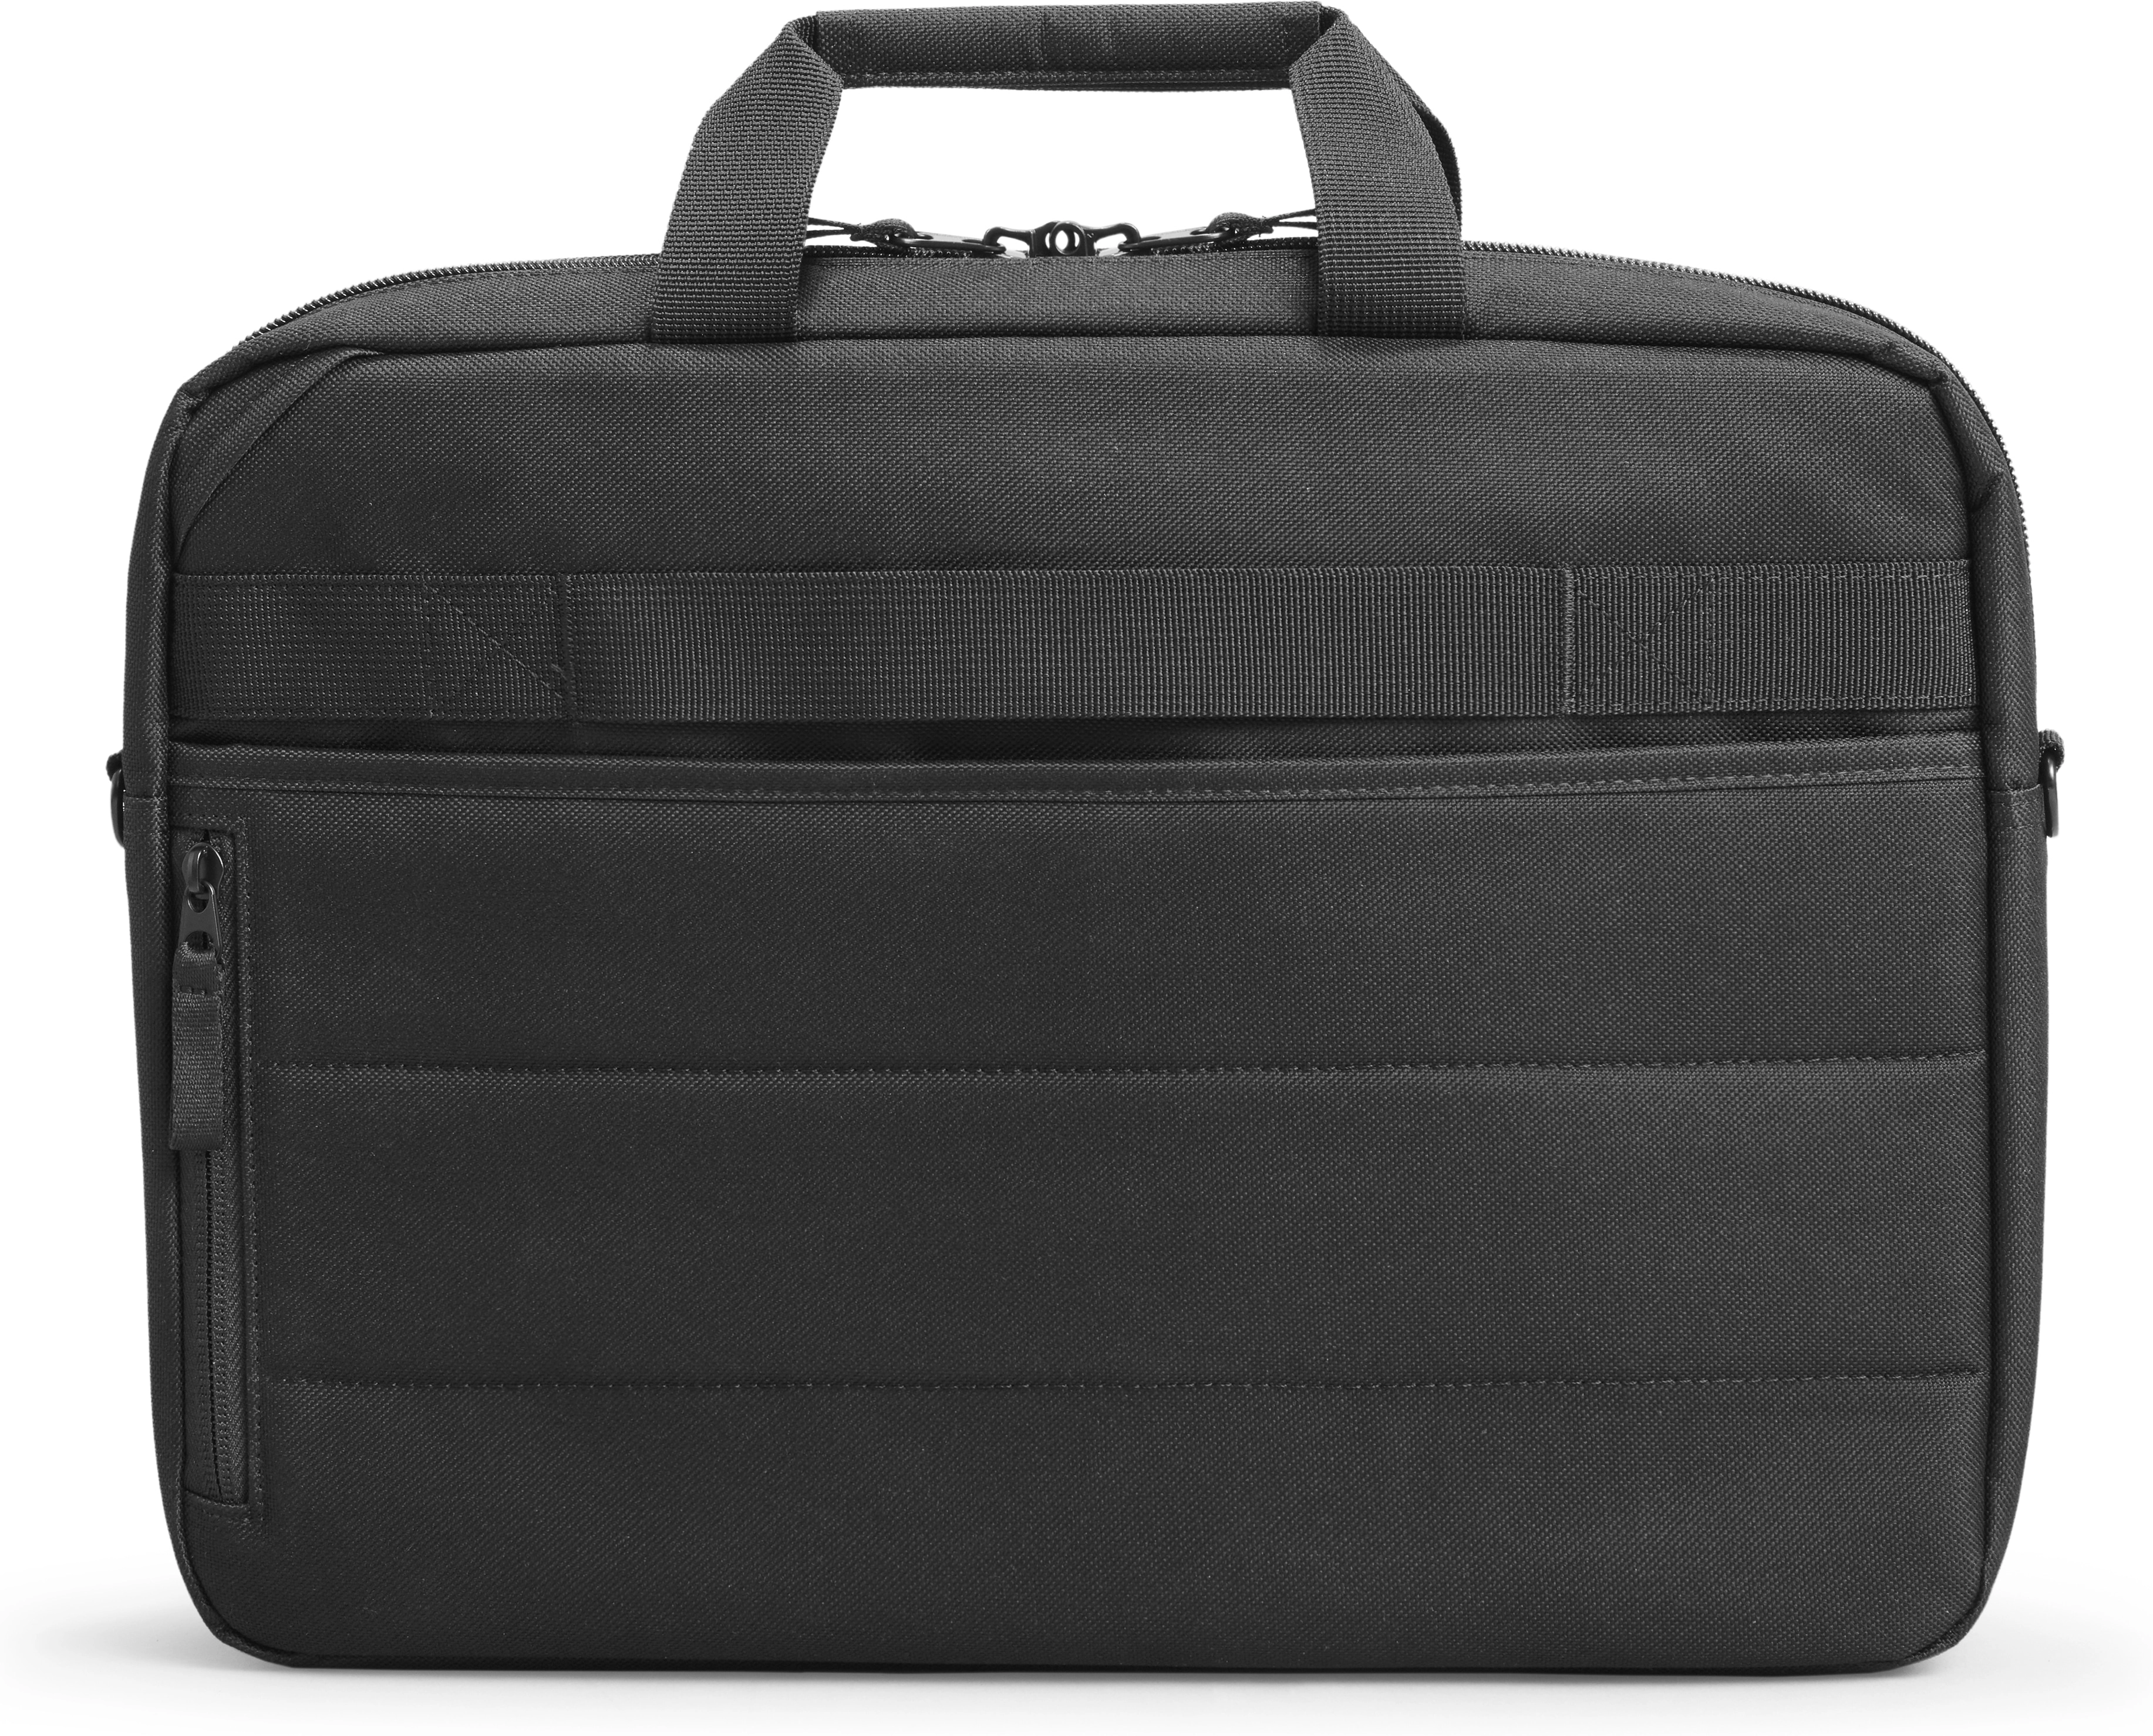 HP Rnw Business 15.6 Laptop Bag